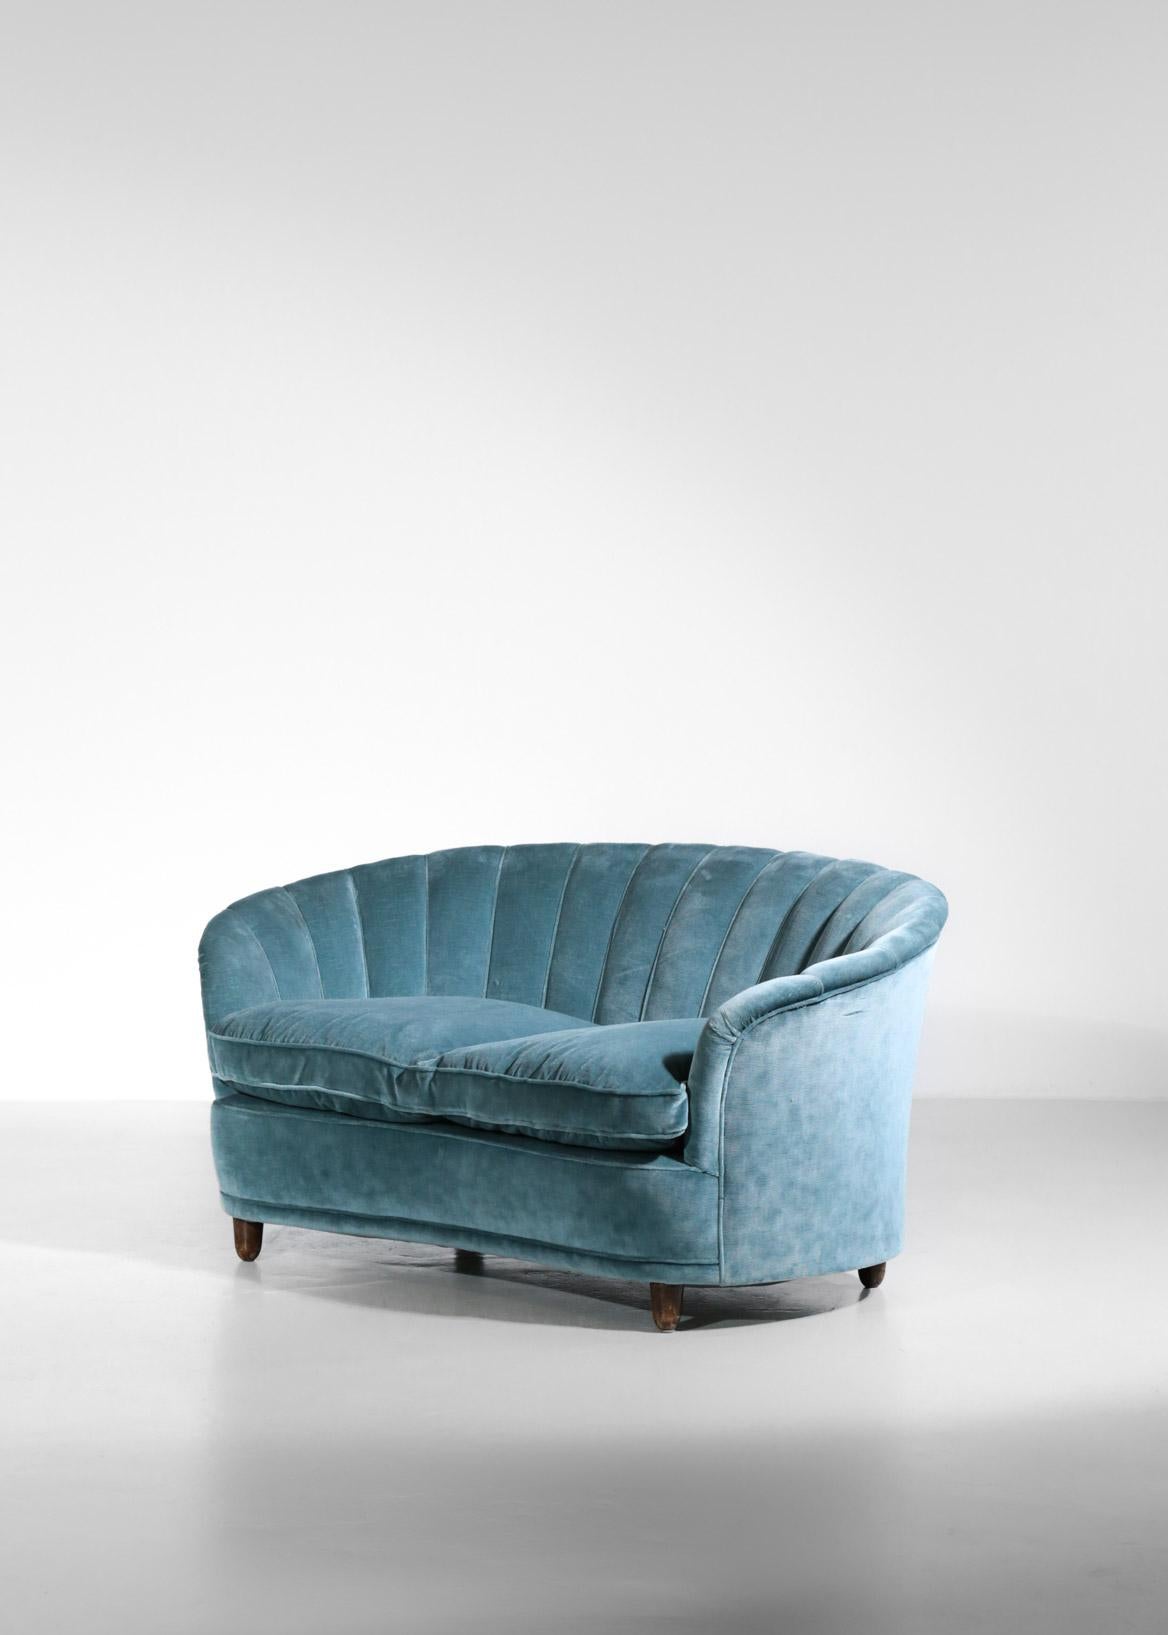 Italian Sofa by Gio Ponti Design 1960s Velvet Vintage Designer 2 Seat 8